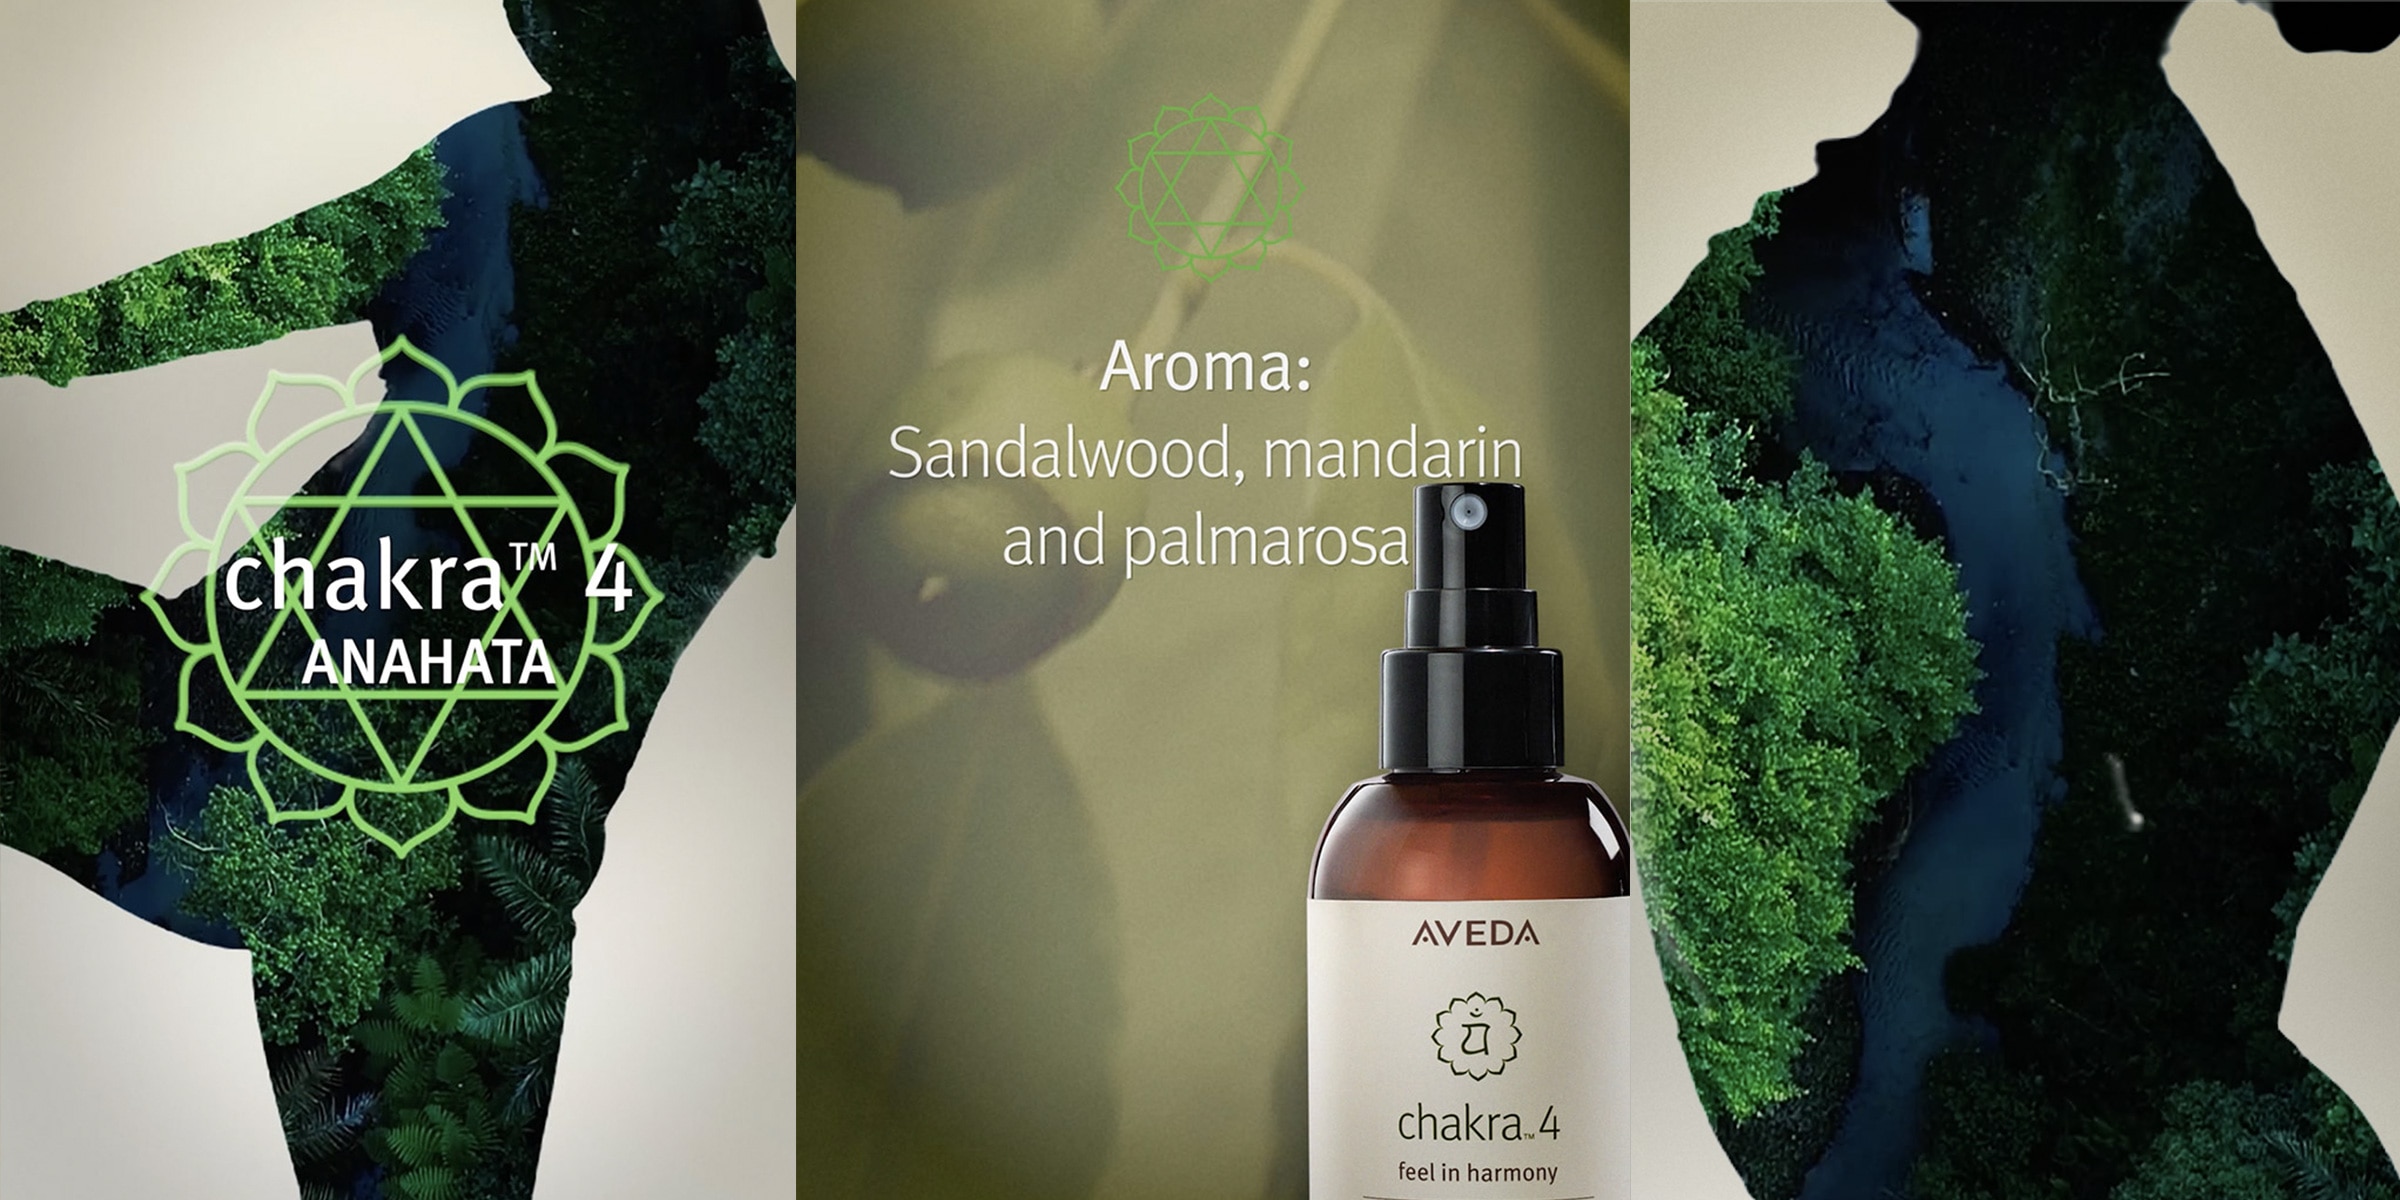 Chakra 4 aroma includes saldalwood, mandarin and palmarosa